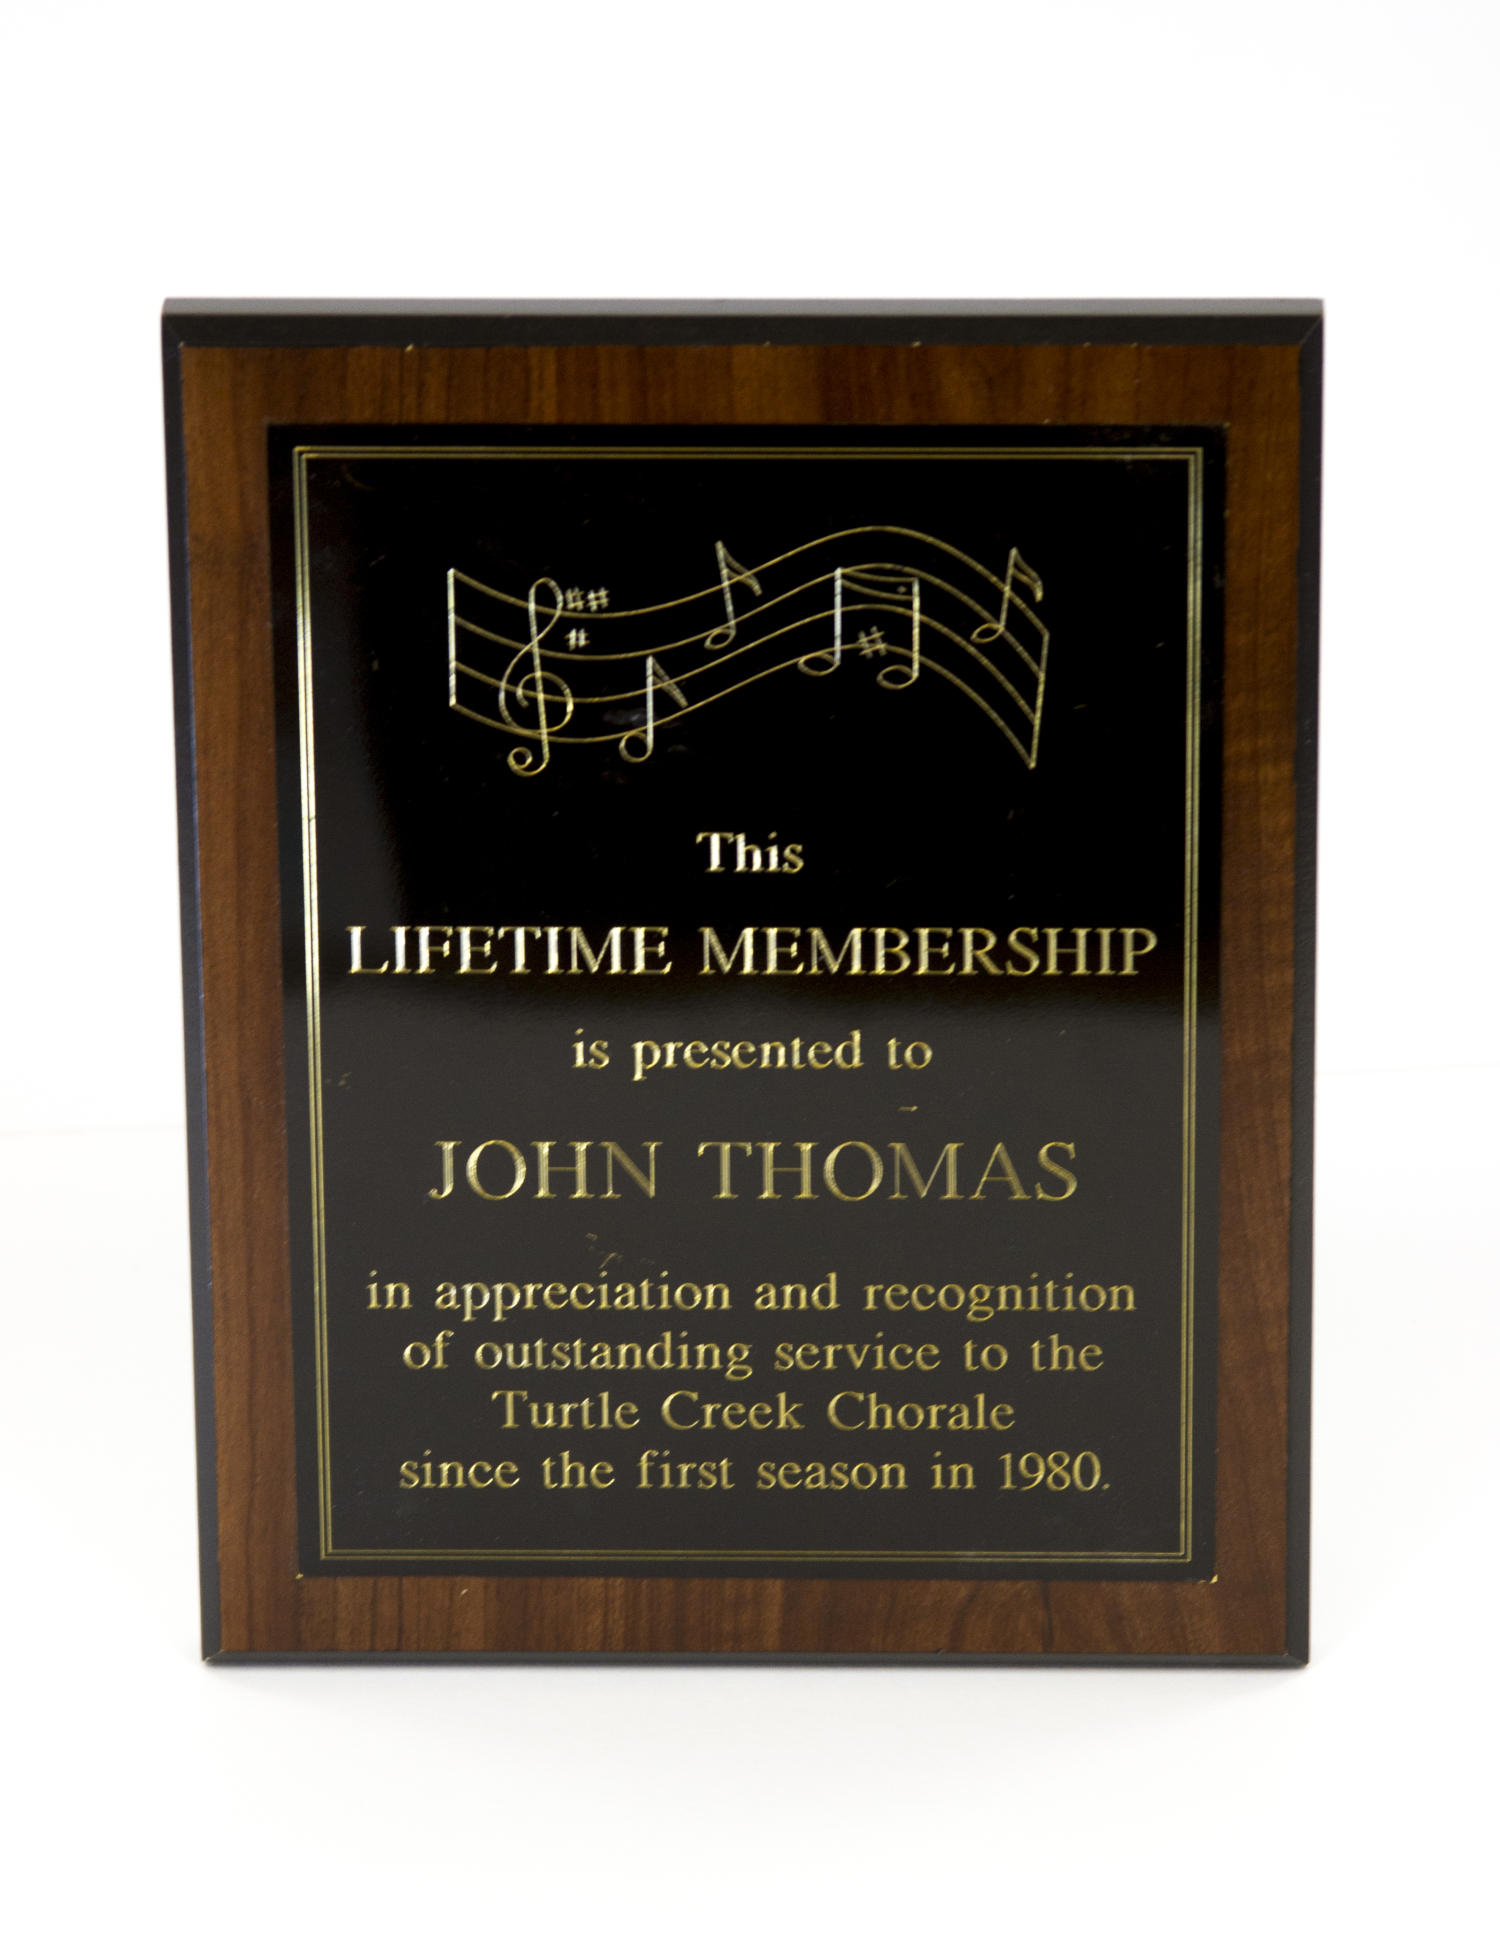 [Lifetime Membership Award]
                                                
                                                    [Sequence #]: 1 of 1
                                                